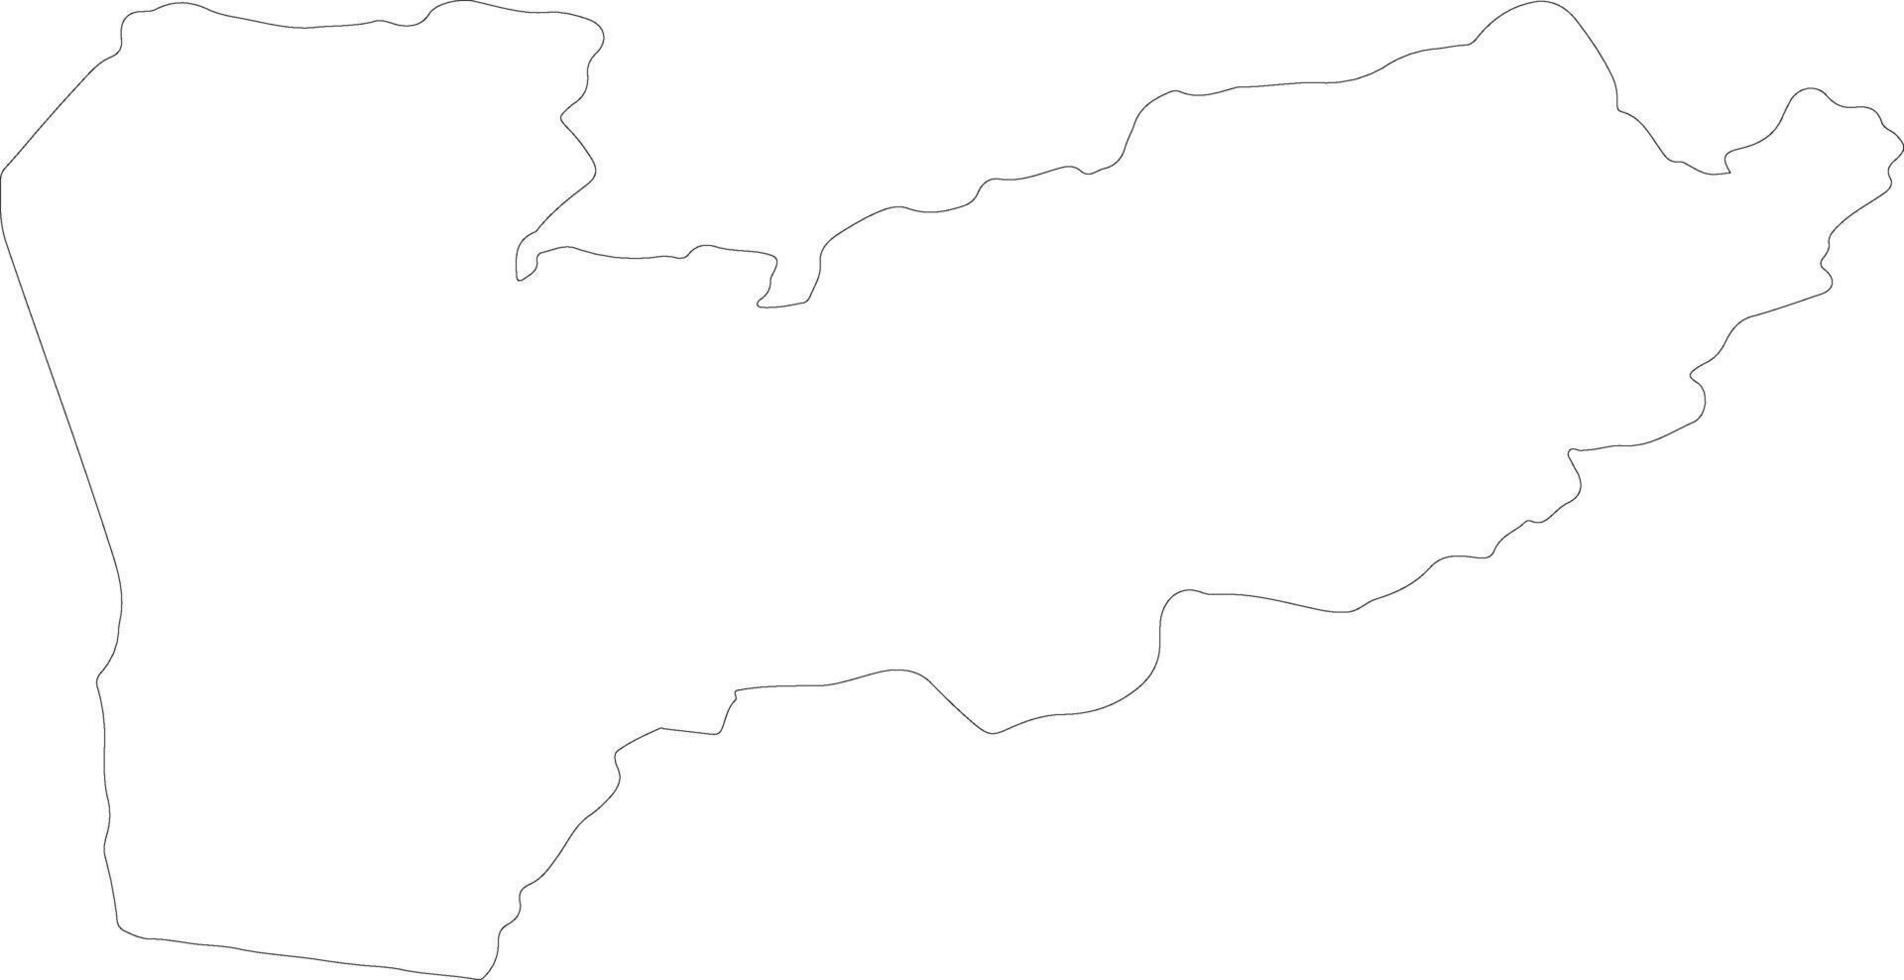 fara afghanistan schema carta geografica vettore